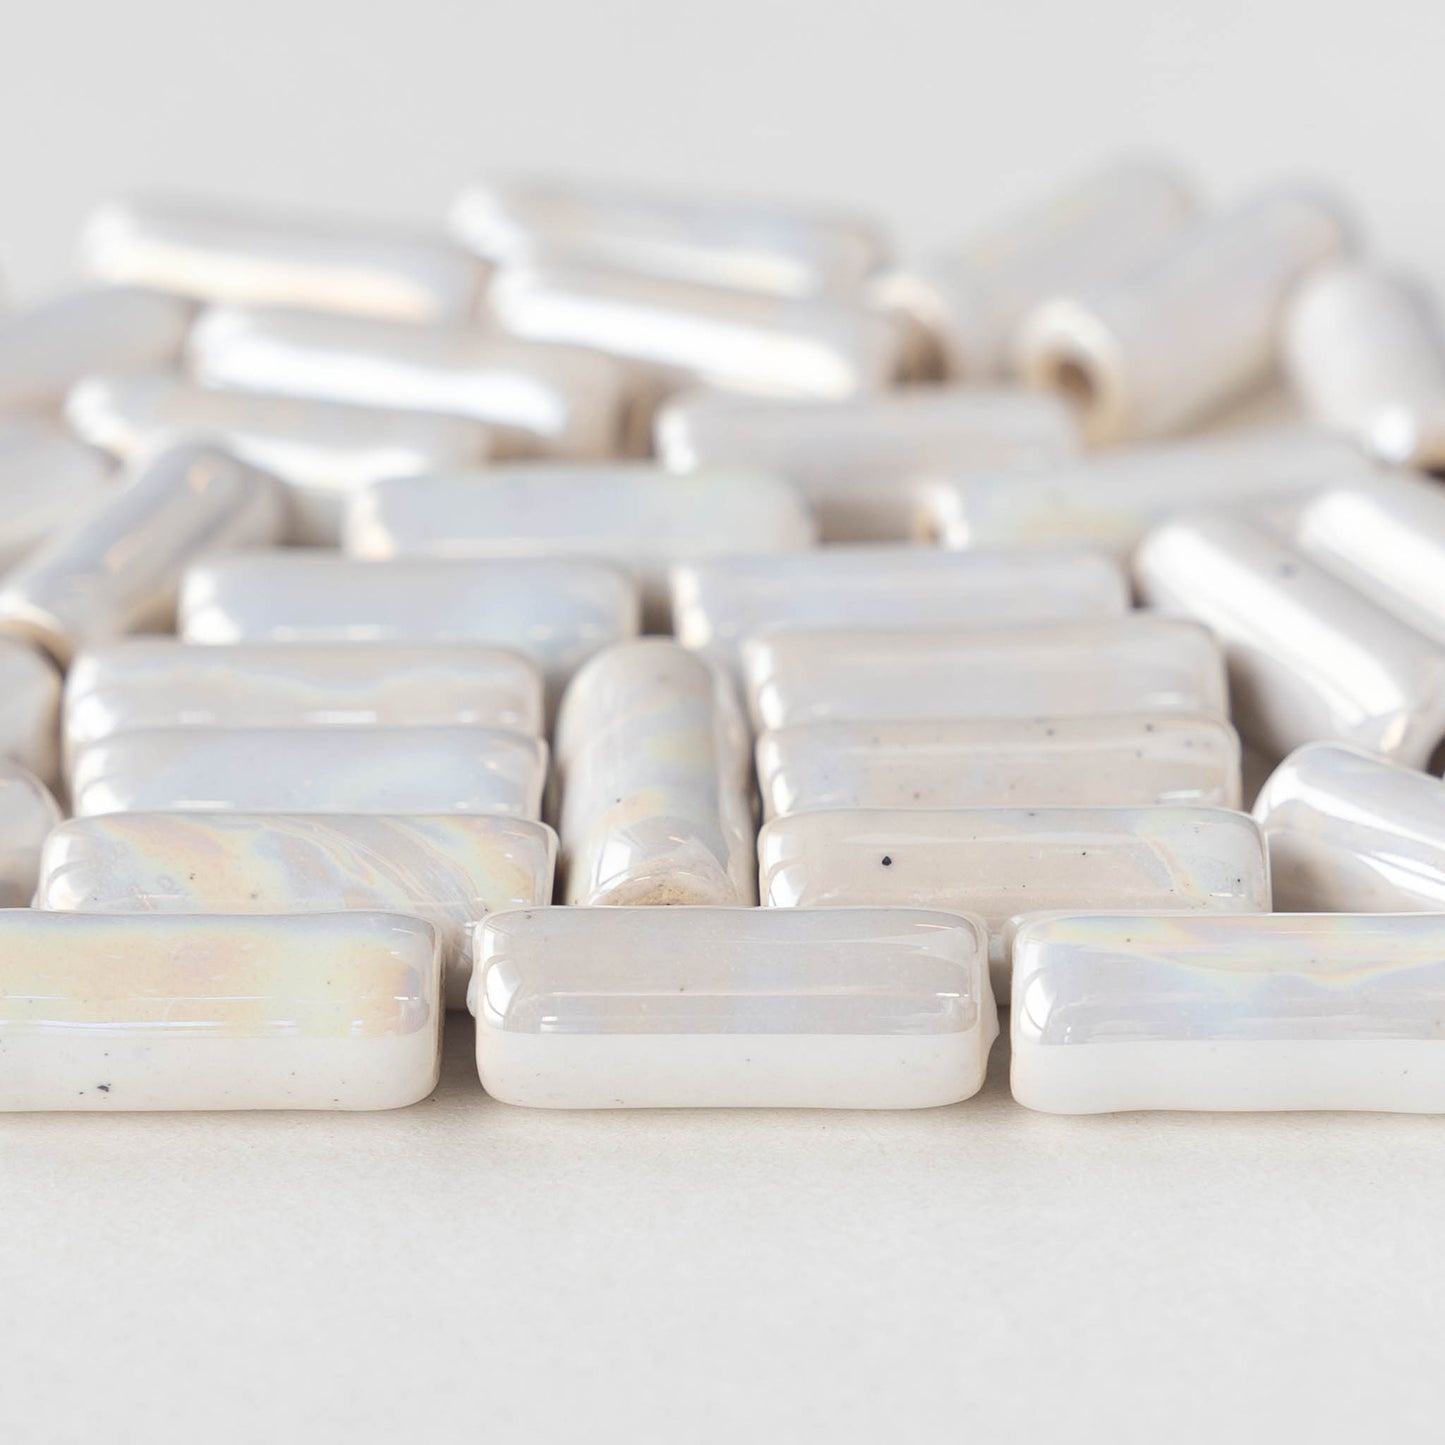 17mm Glazed Ceramic Tube Beads - Iridescent Ivory Opal - 8 or 24